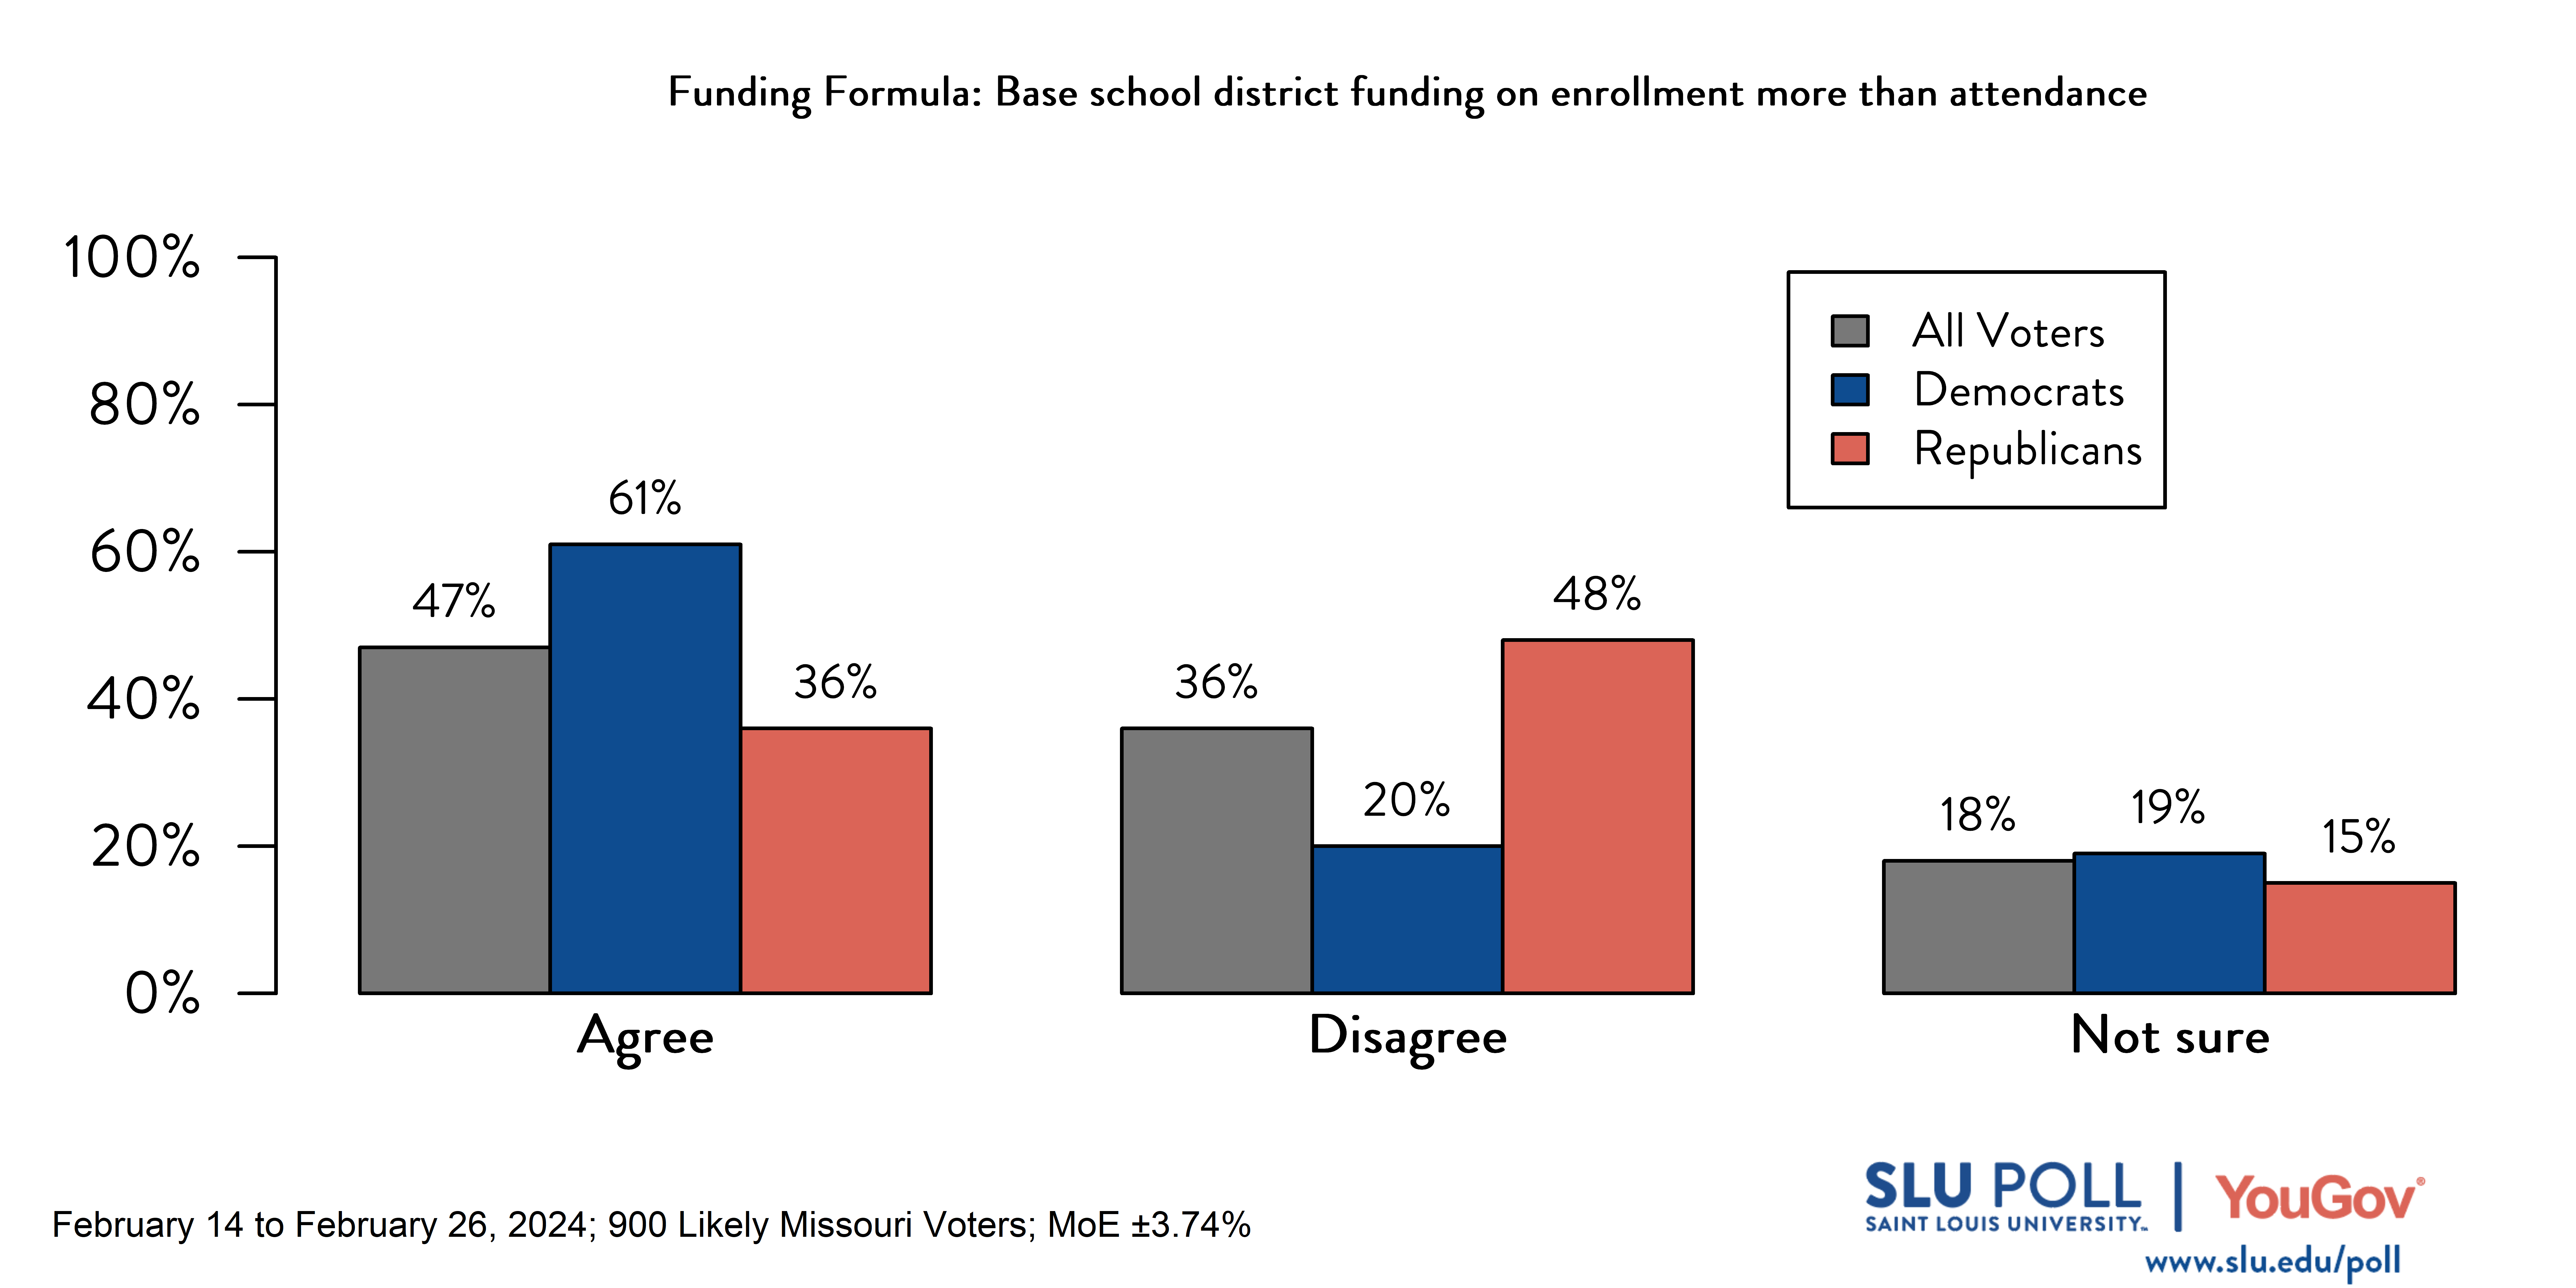 SLU/YouGov Poll results for school funding formula enrollment question